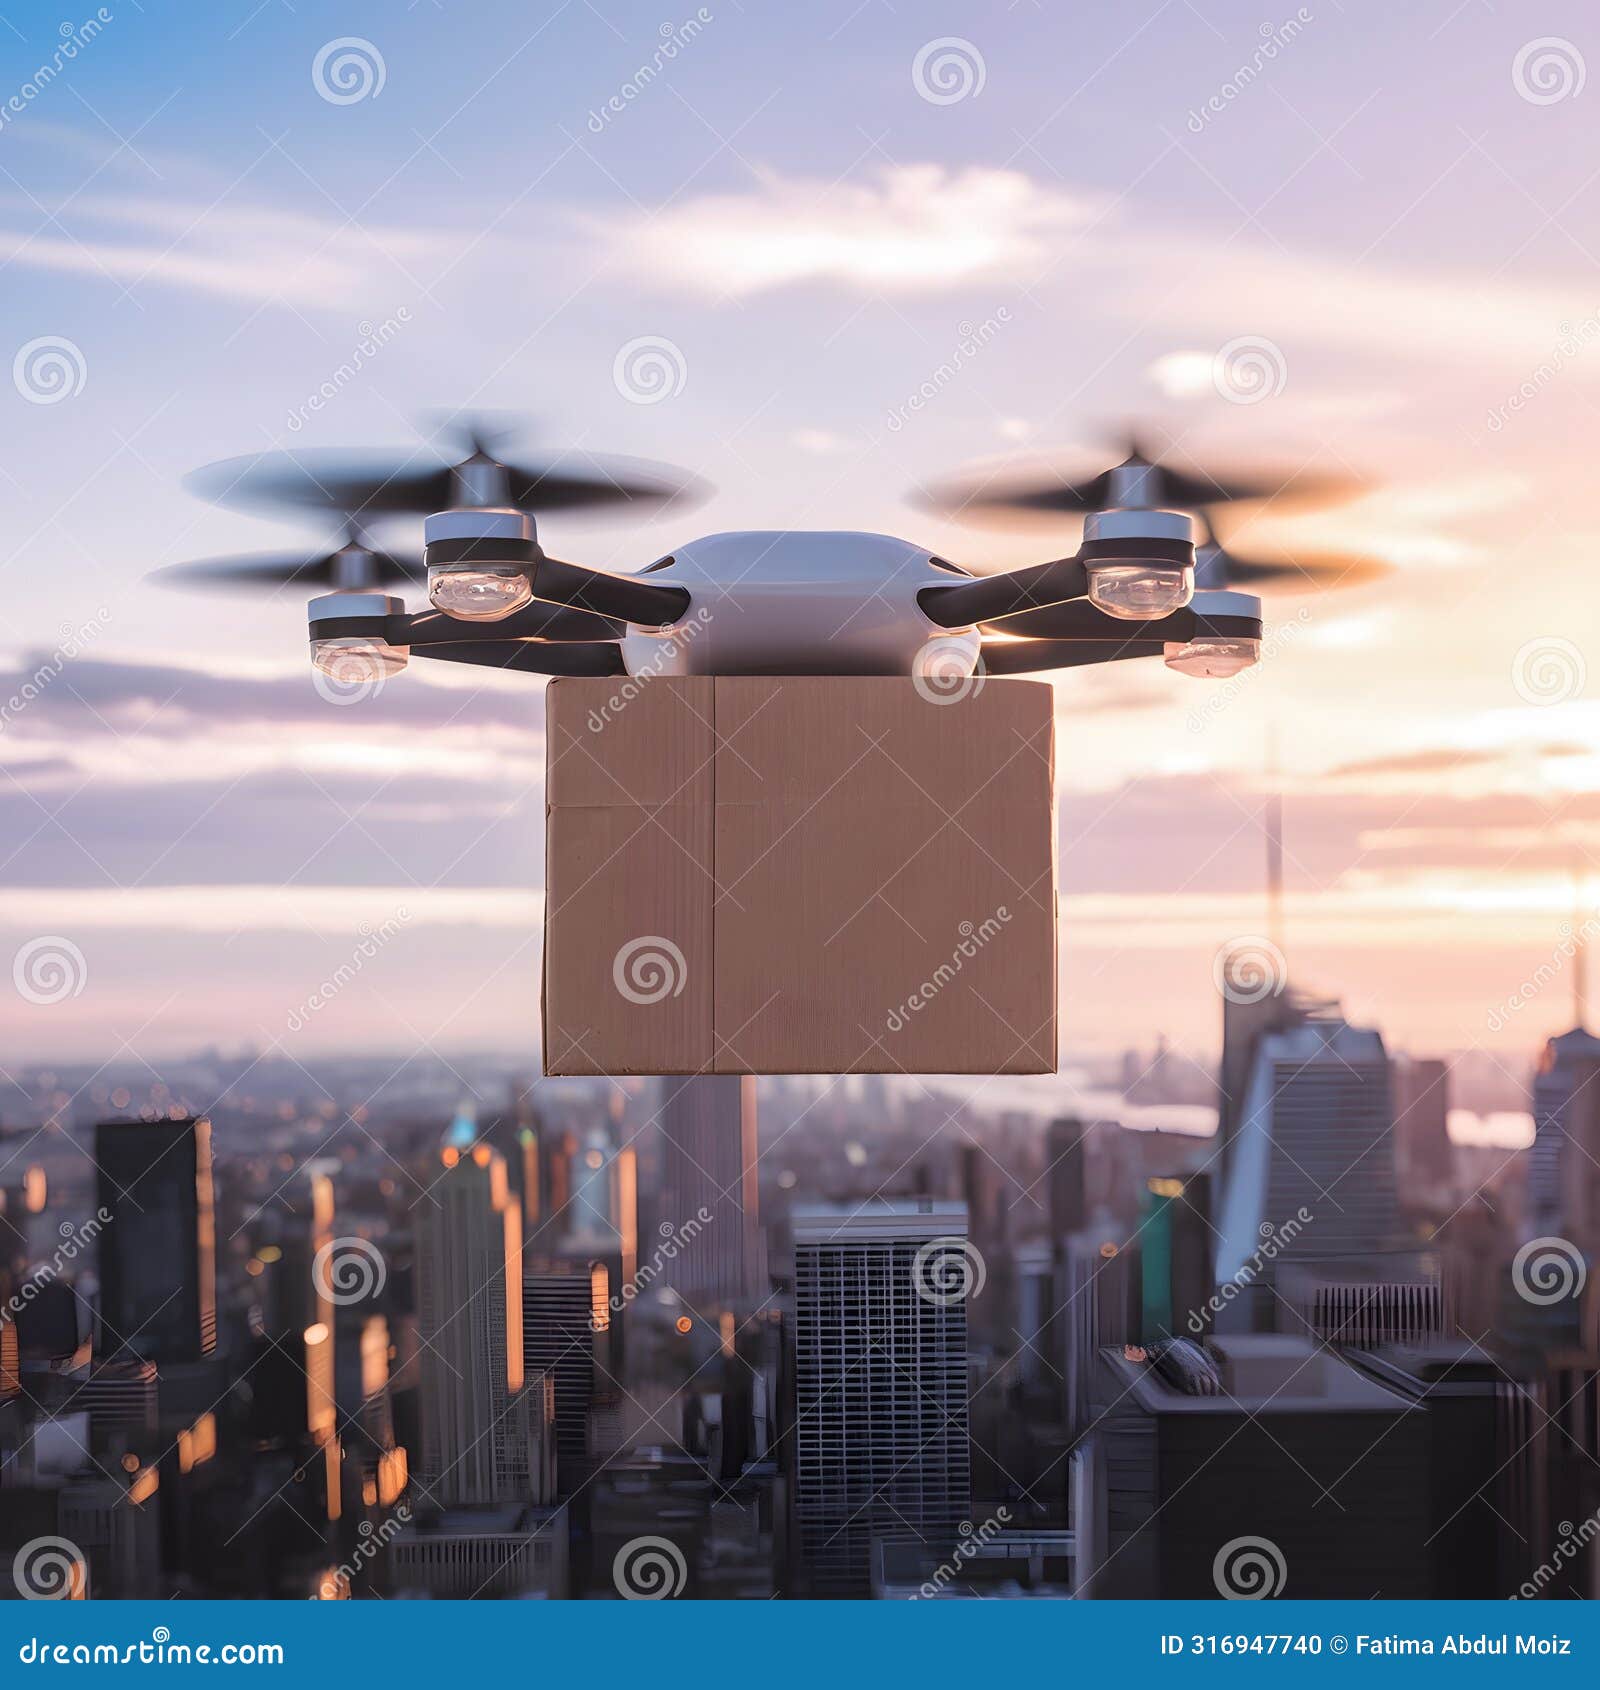 drone flies in city, delivering order in cardboard box